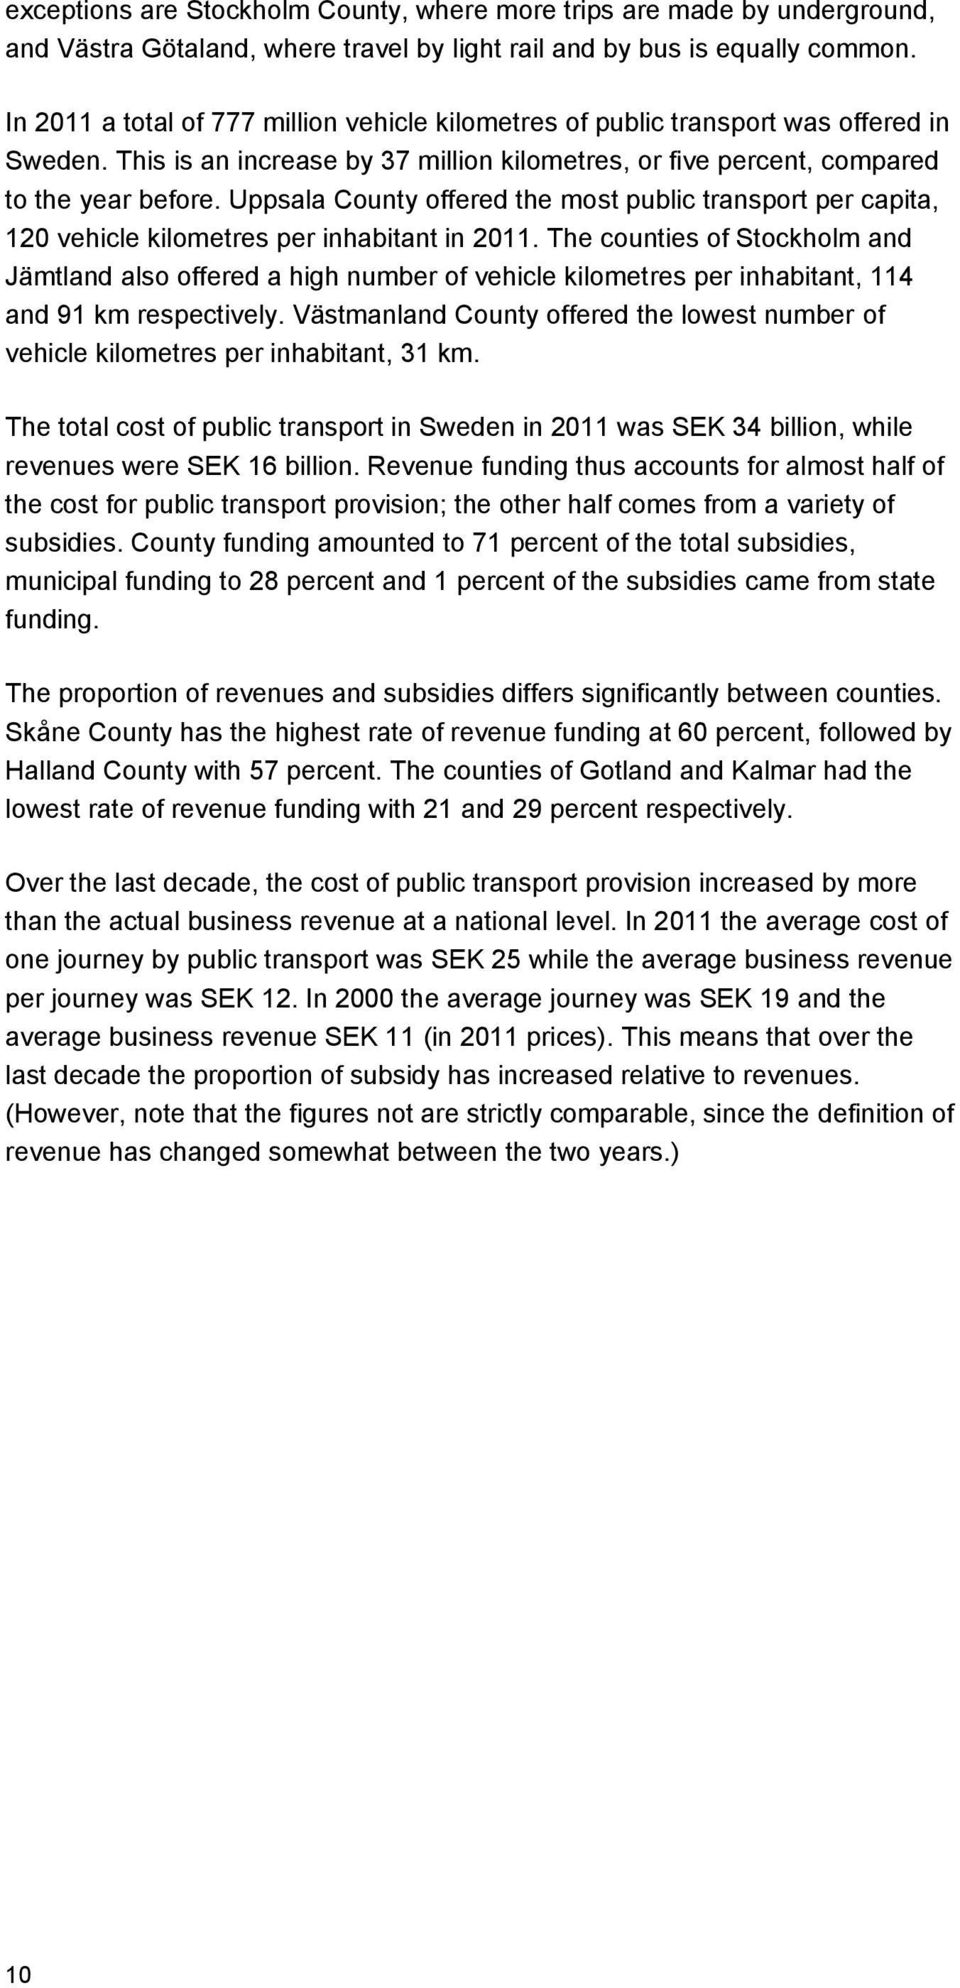 Uppsala County offered the most public transport per capita, 120 vehicle kilometres per inhabitant in 2011.